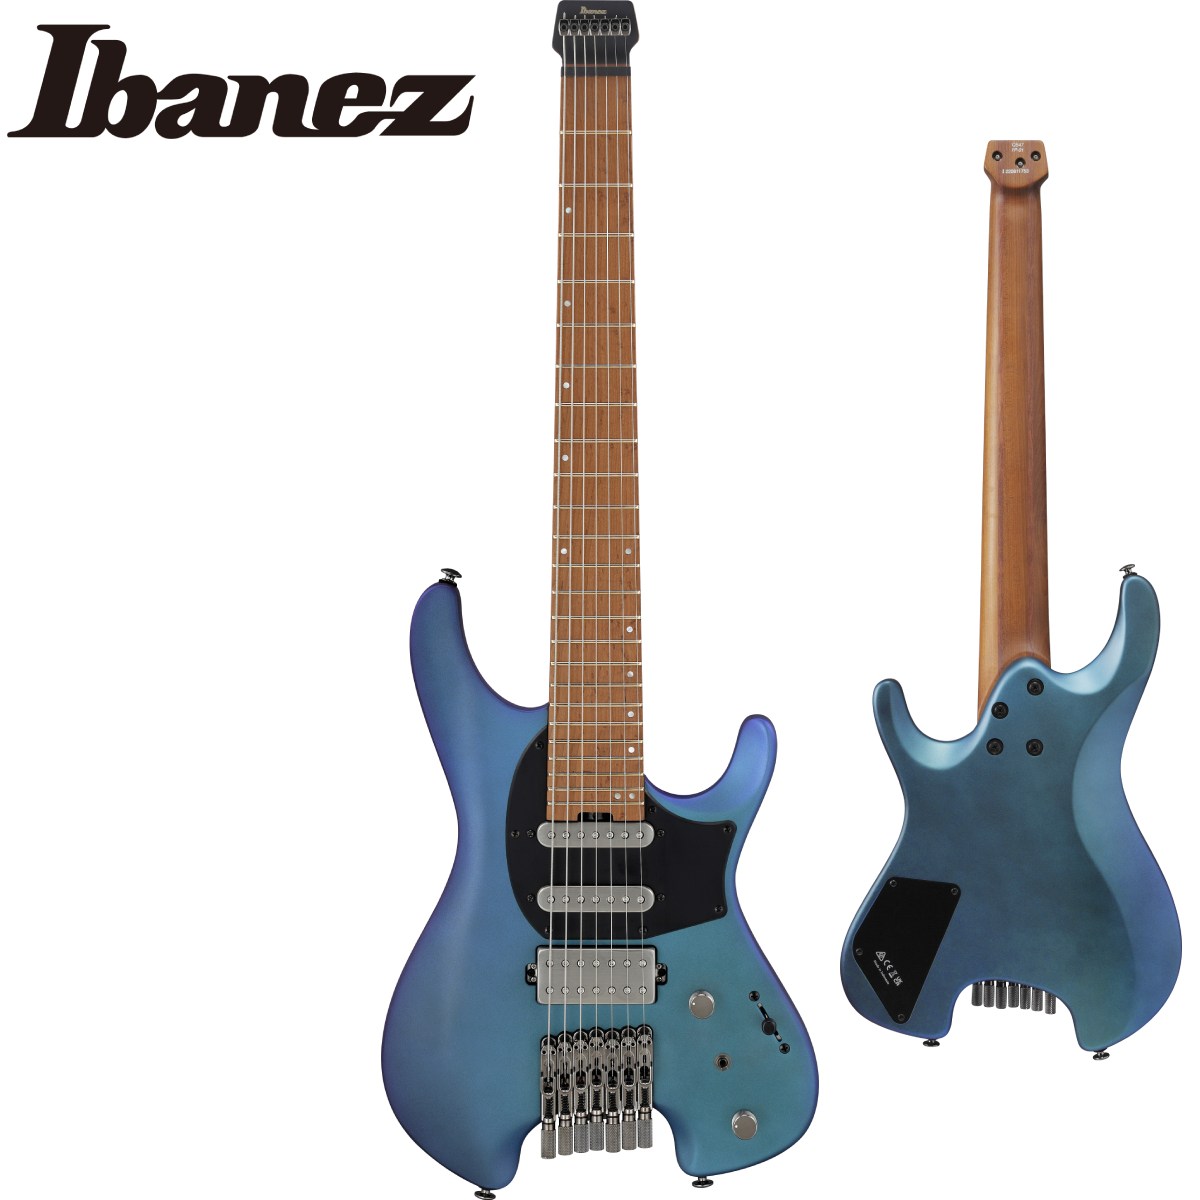 Ibanez Q547 -BMM (Blue Chameleon Metallic Matte)- 新品 アイバニーズ 青,ブルー マジョーラ,マルチカラー Electric Guitar,エレキギター QUEST Headless,ヘッドレス